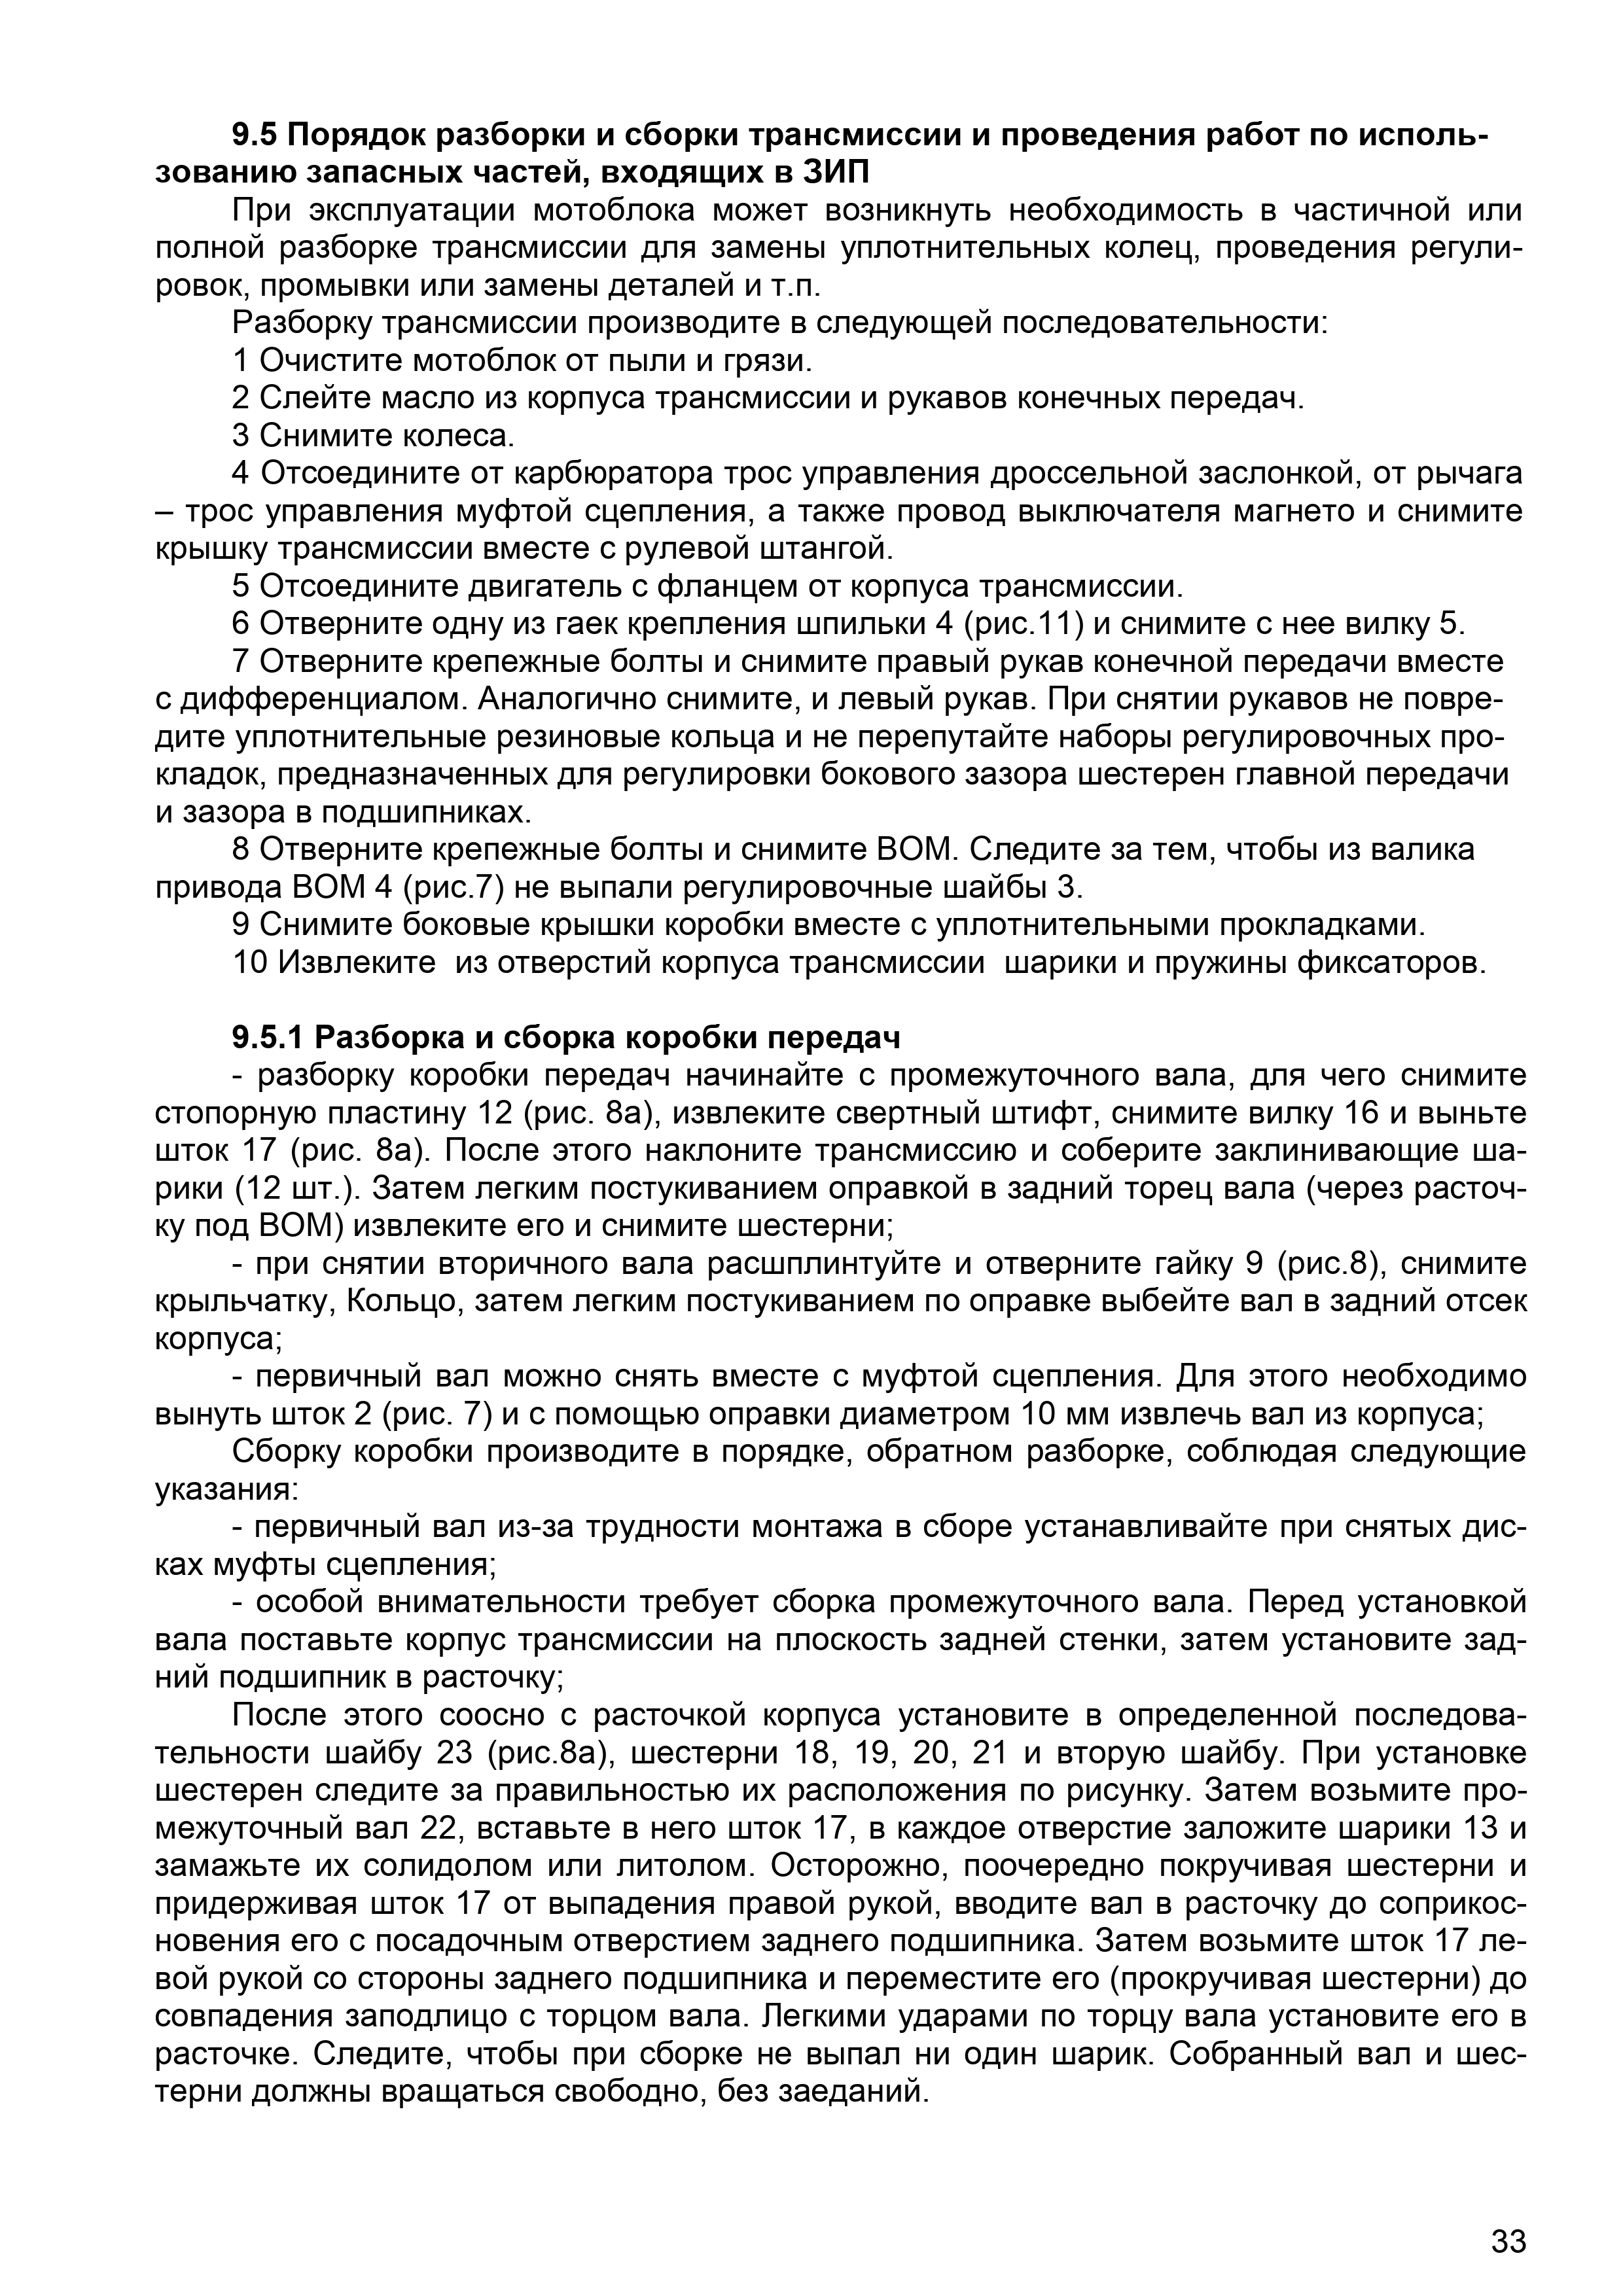 belarus_09h_manual i catalog (1)_page-0033